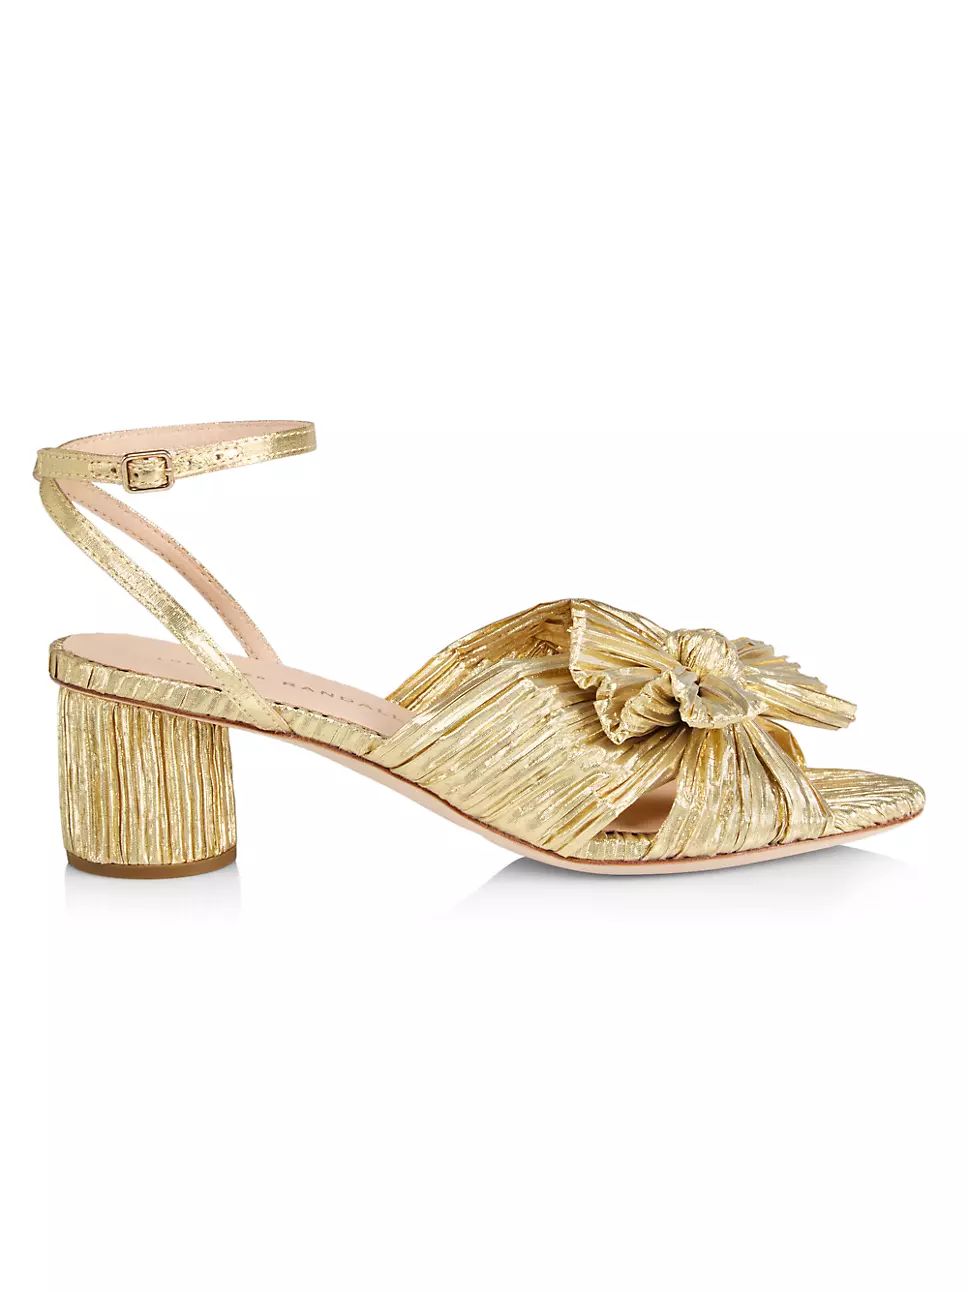 Loeffler Randall Dahlia Knotted Sandals | Saks Fifth Avenue